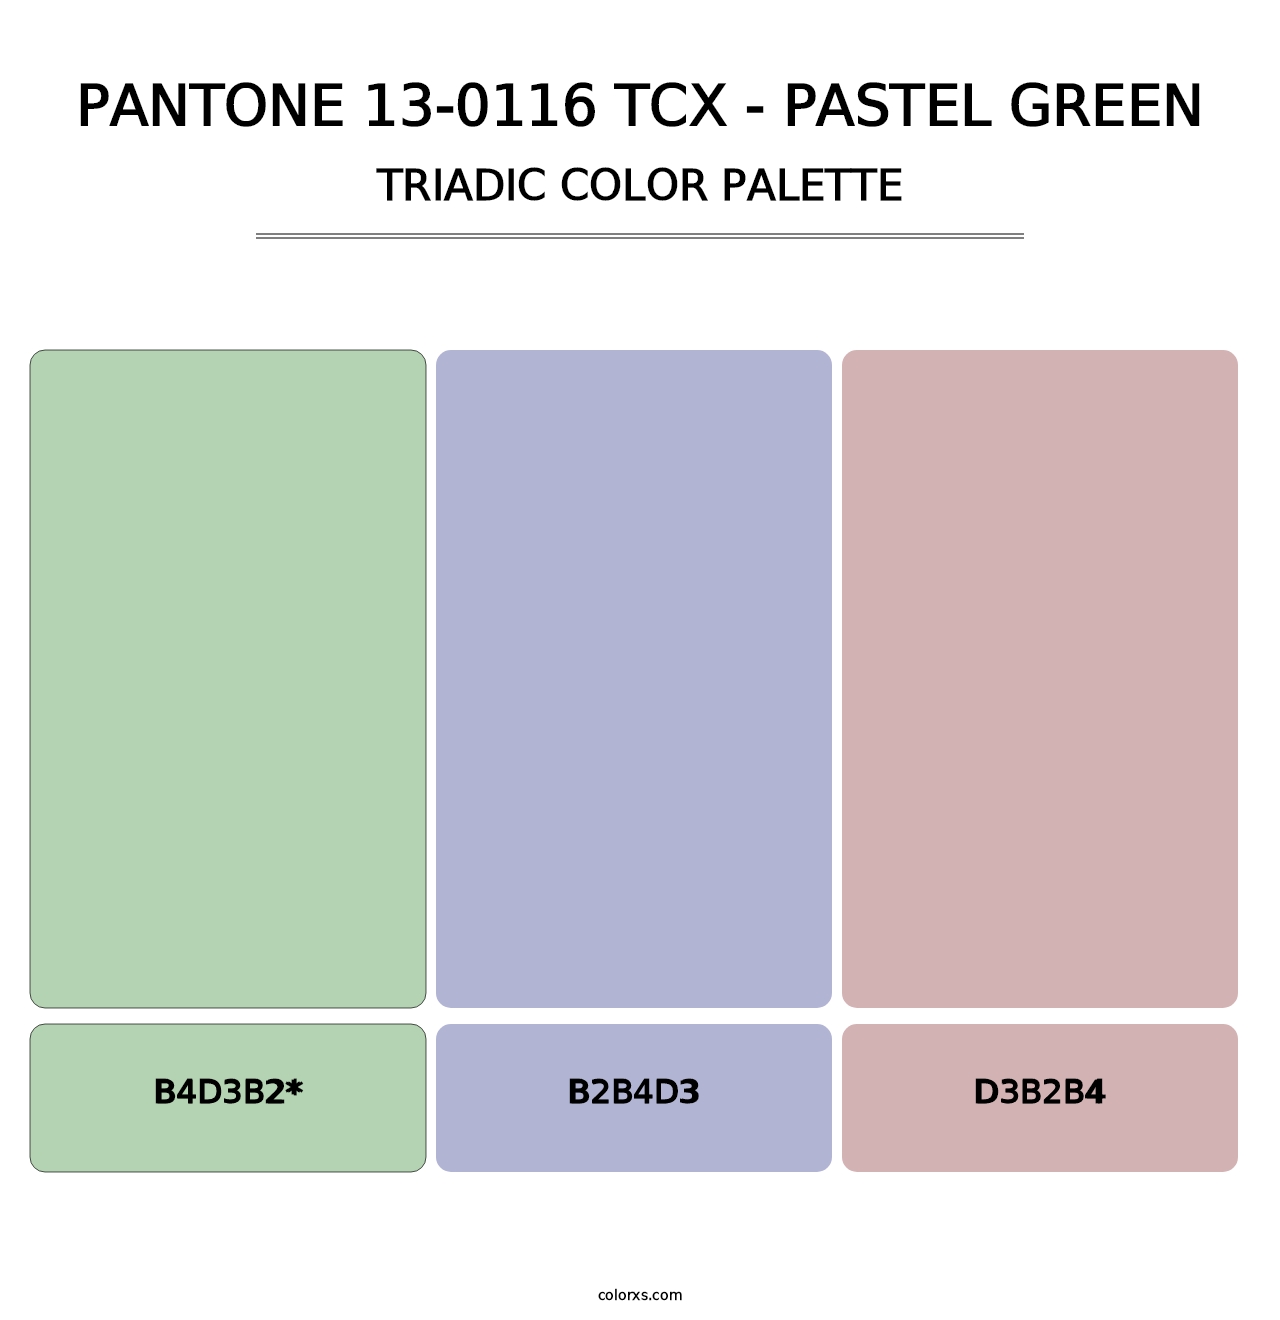 PANTONE 13-0116 TCX - Pastel Green - Triadic Color Palette